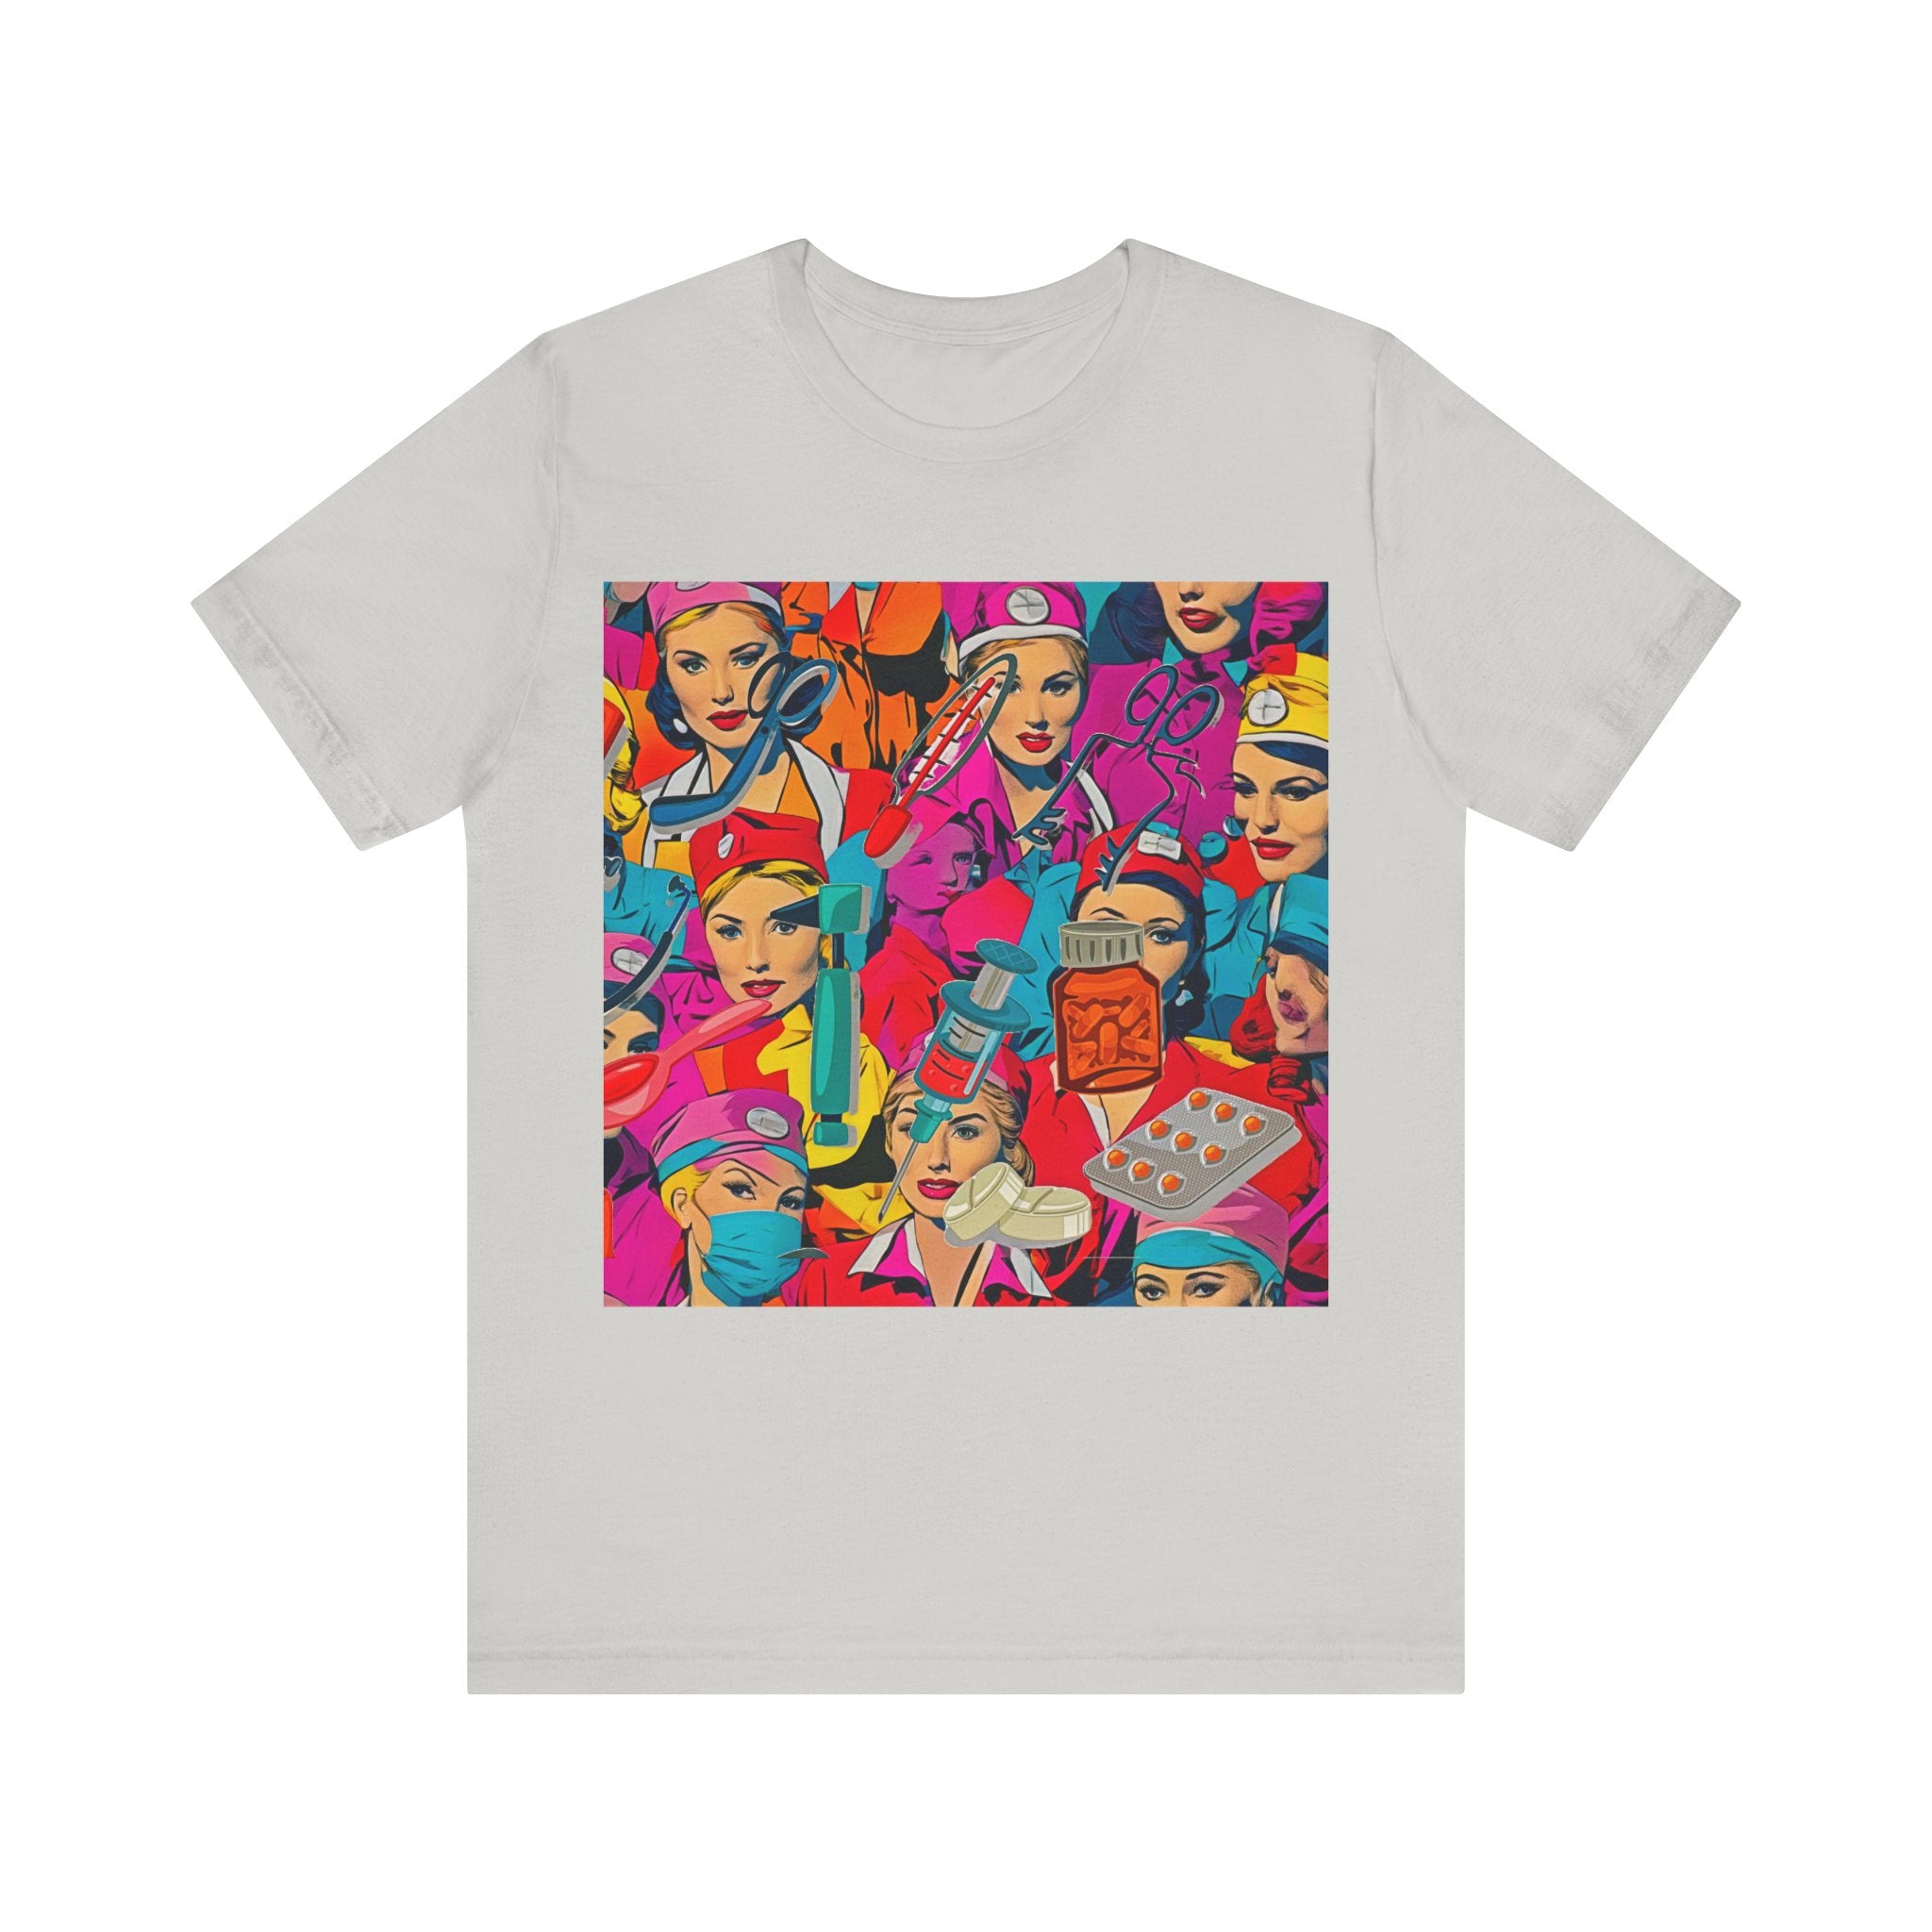 T-Shirt NURSES Original Design Unisex Adult Sizes Show Friend Love Fun Gift Beauty Jersey Tee Like Art Fit People Job Style Work Home Party